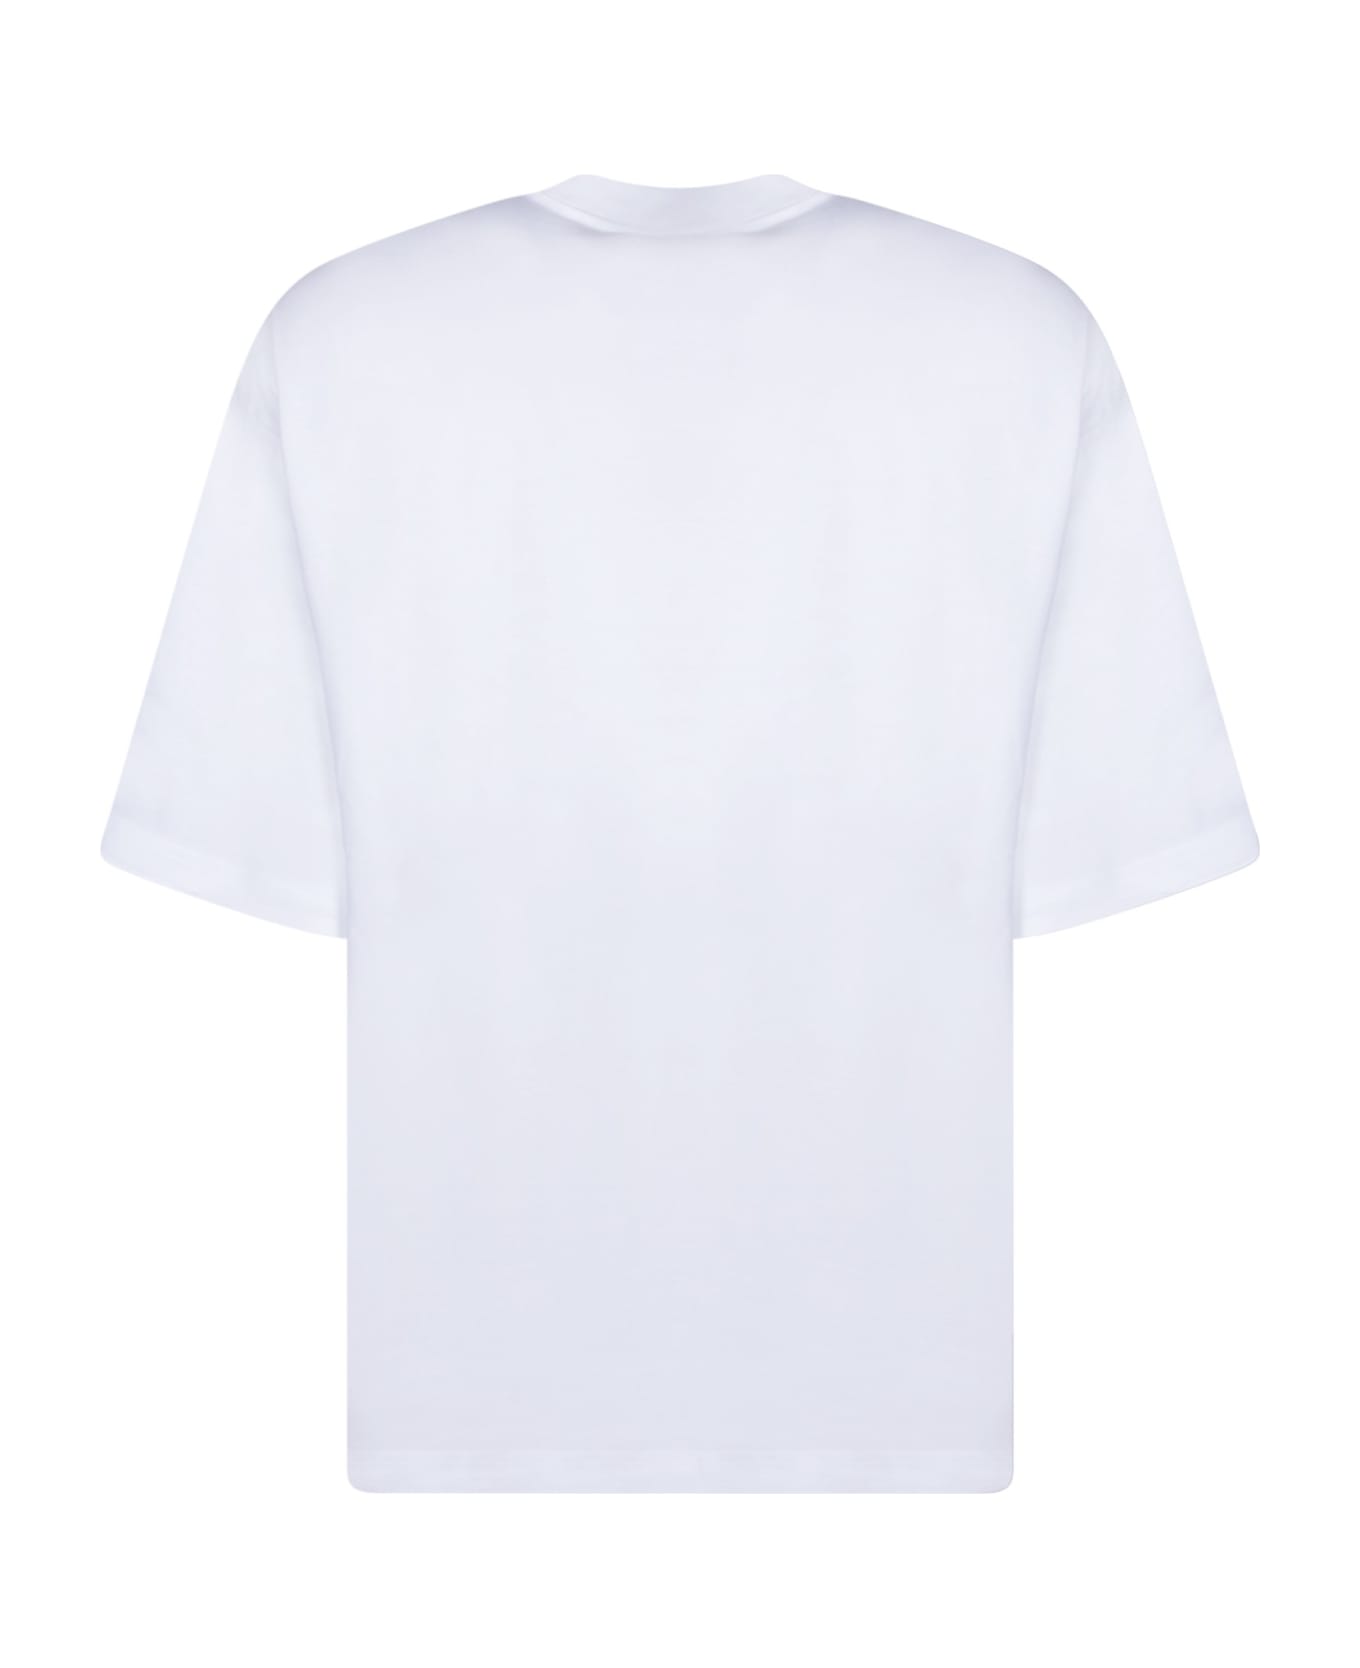 Lanvin Curblance White T-shirt - White シャツ